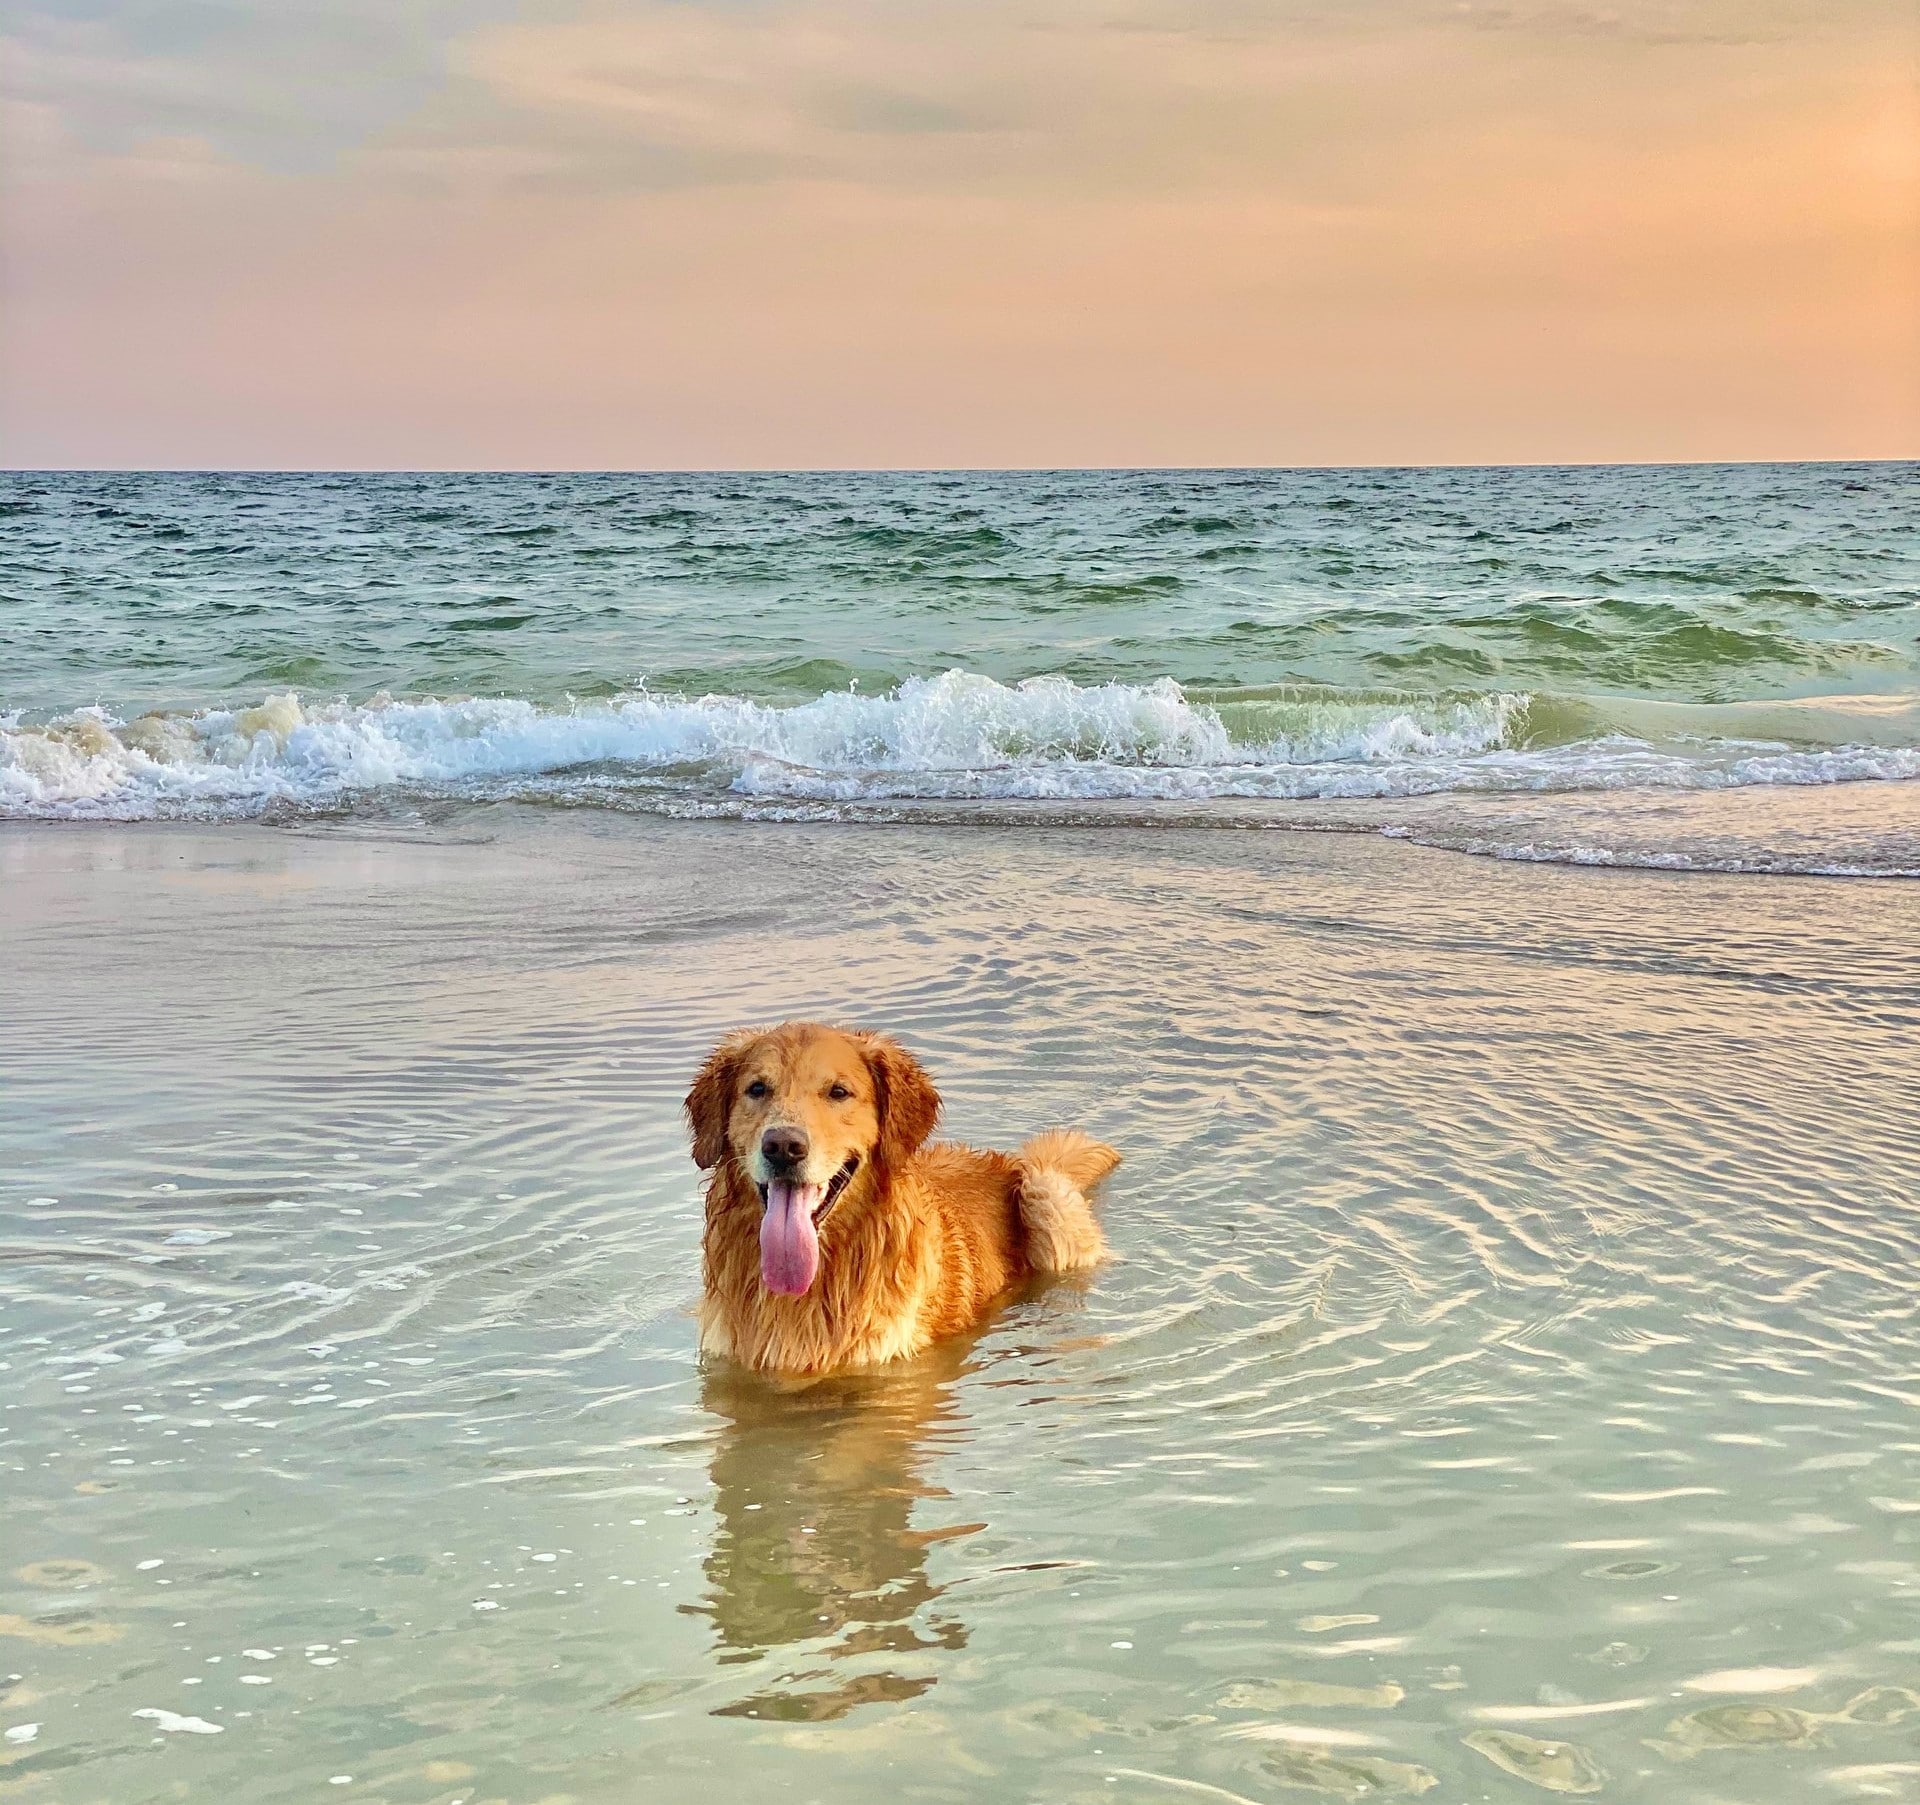 Golden Retriever at the beach, Bald Head lsland, North Carolina, USA - One of the dog friendly beaches in North Carolina - Photo by Elisa Kennemer on Unsplash